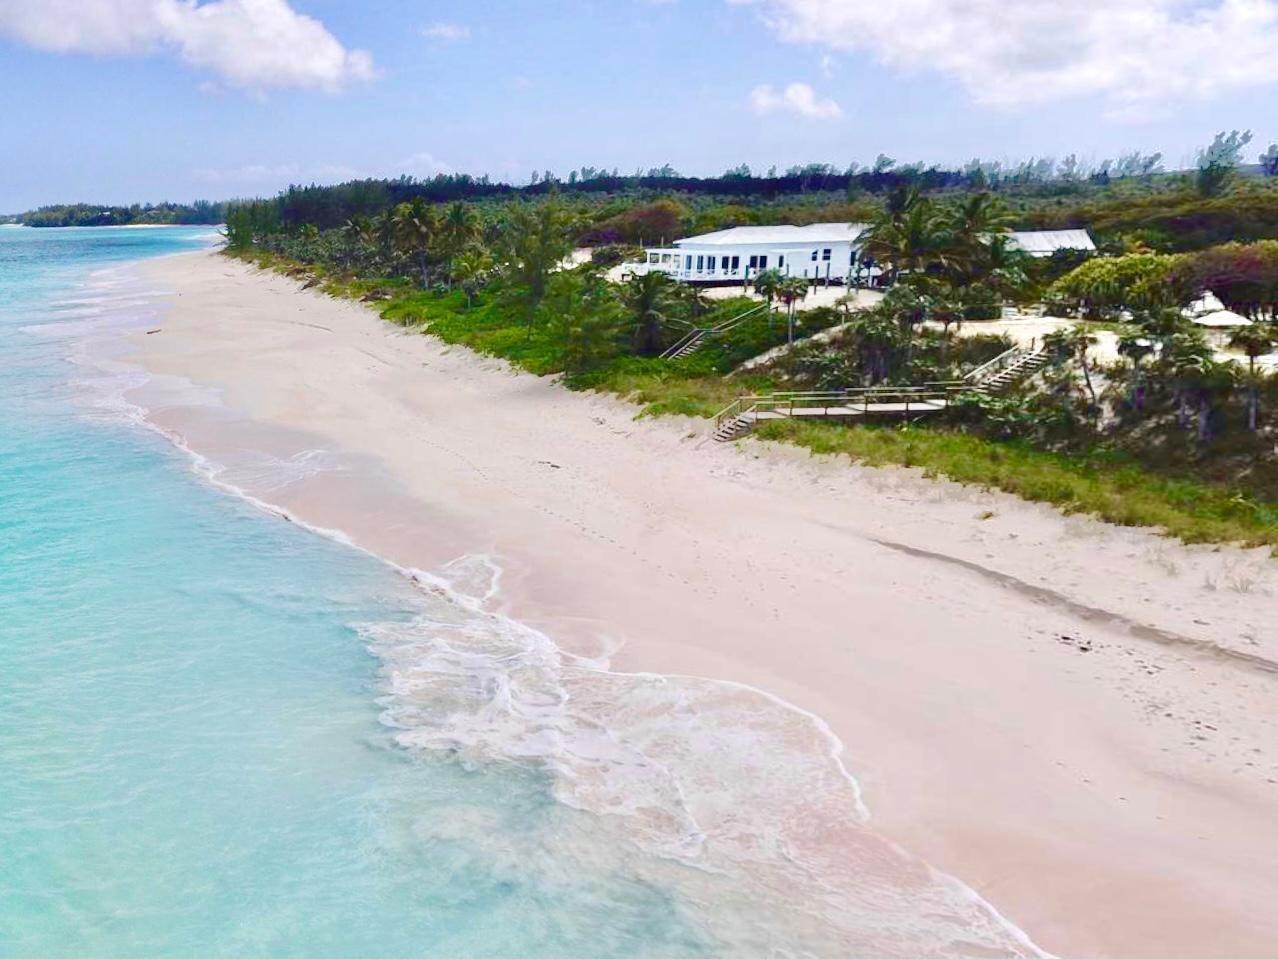 Single Family Homes for Sale at Palmetto Point, Eleuthera Bahamas